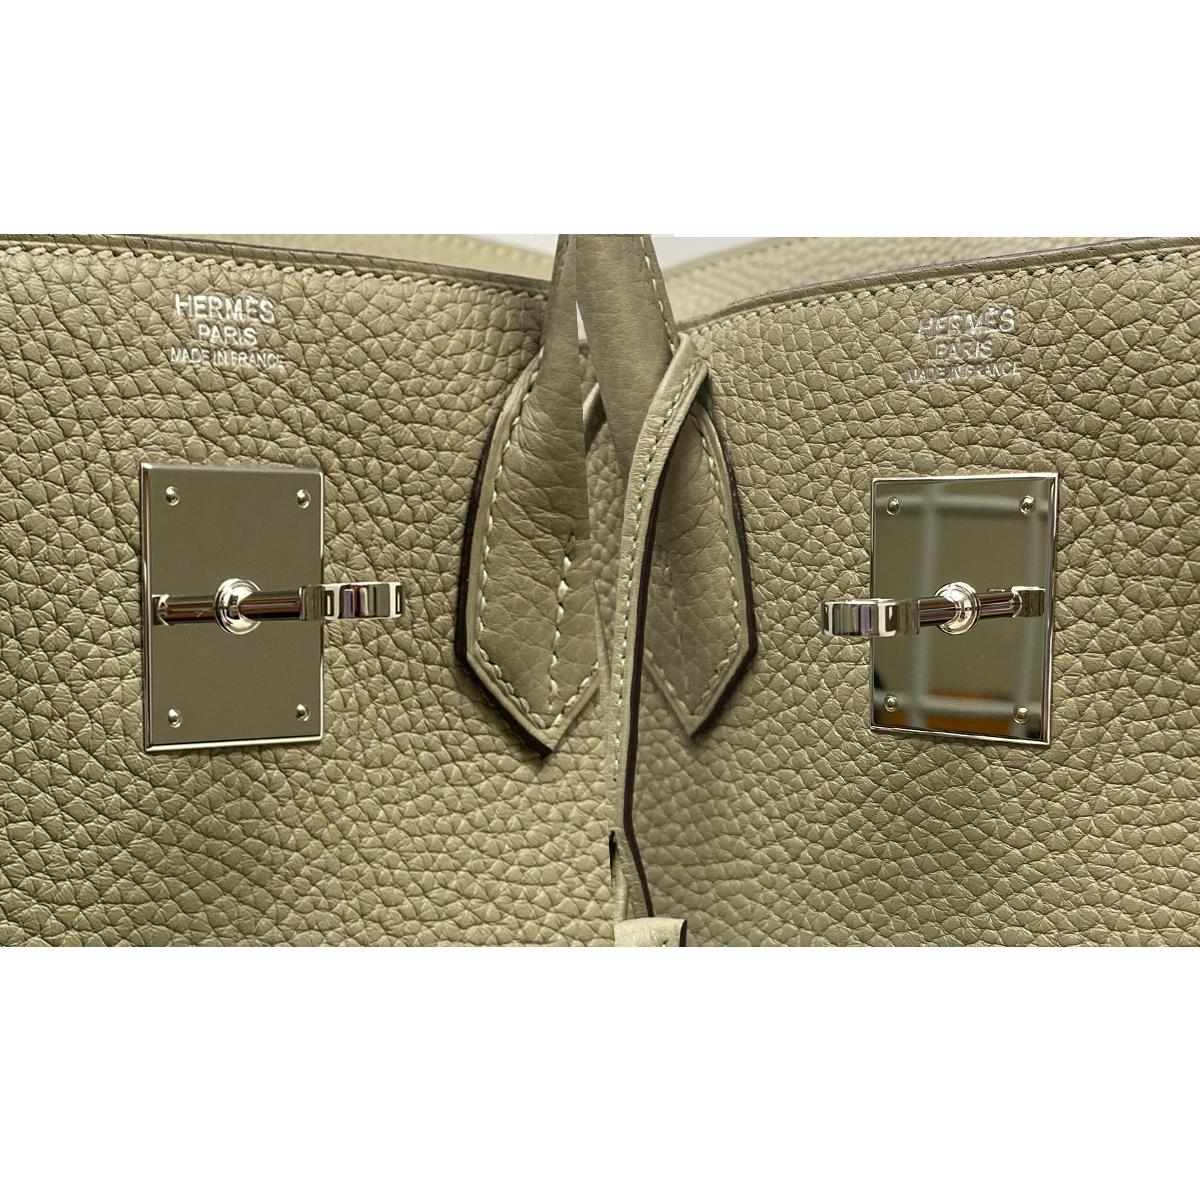 Hermes Birkin 30cm Sauge Clemence Leather Handbag 2016 COMES WITH RECEIPT, DUST  For Sale 1